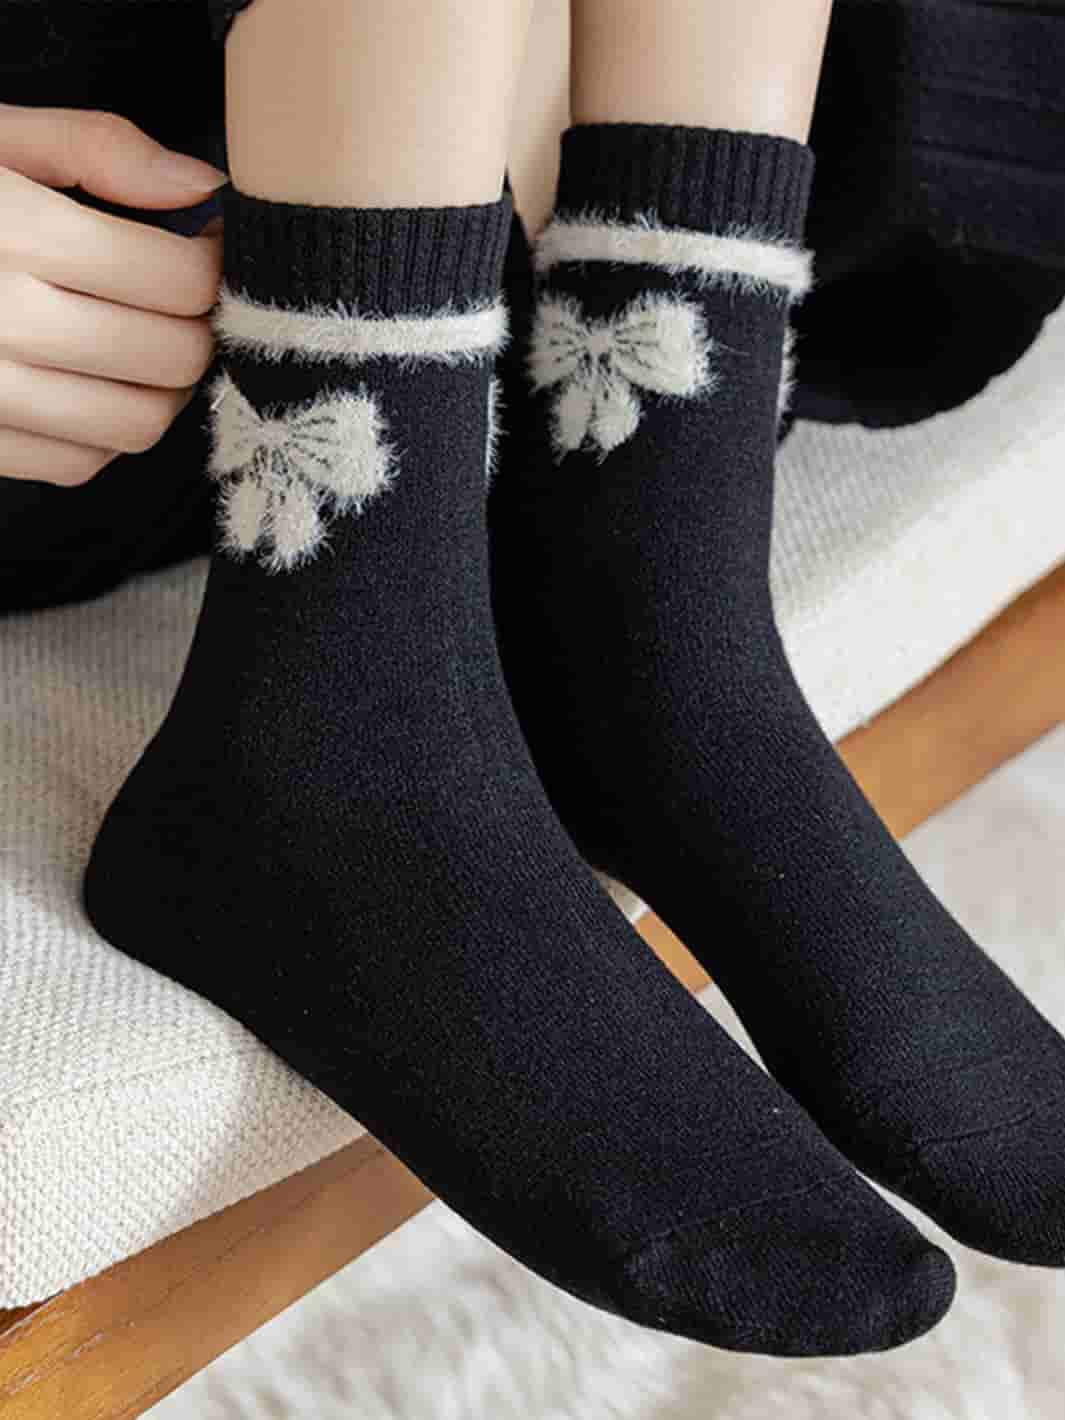 Black and white simple socks